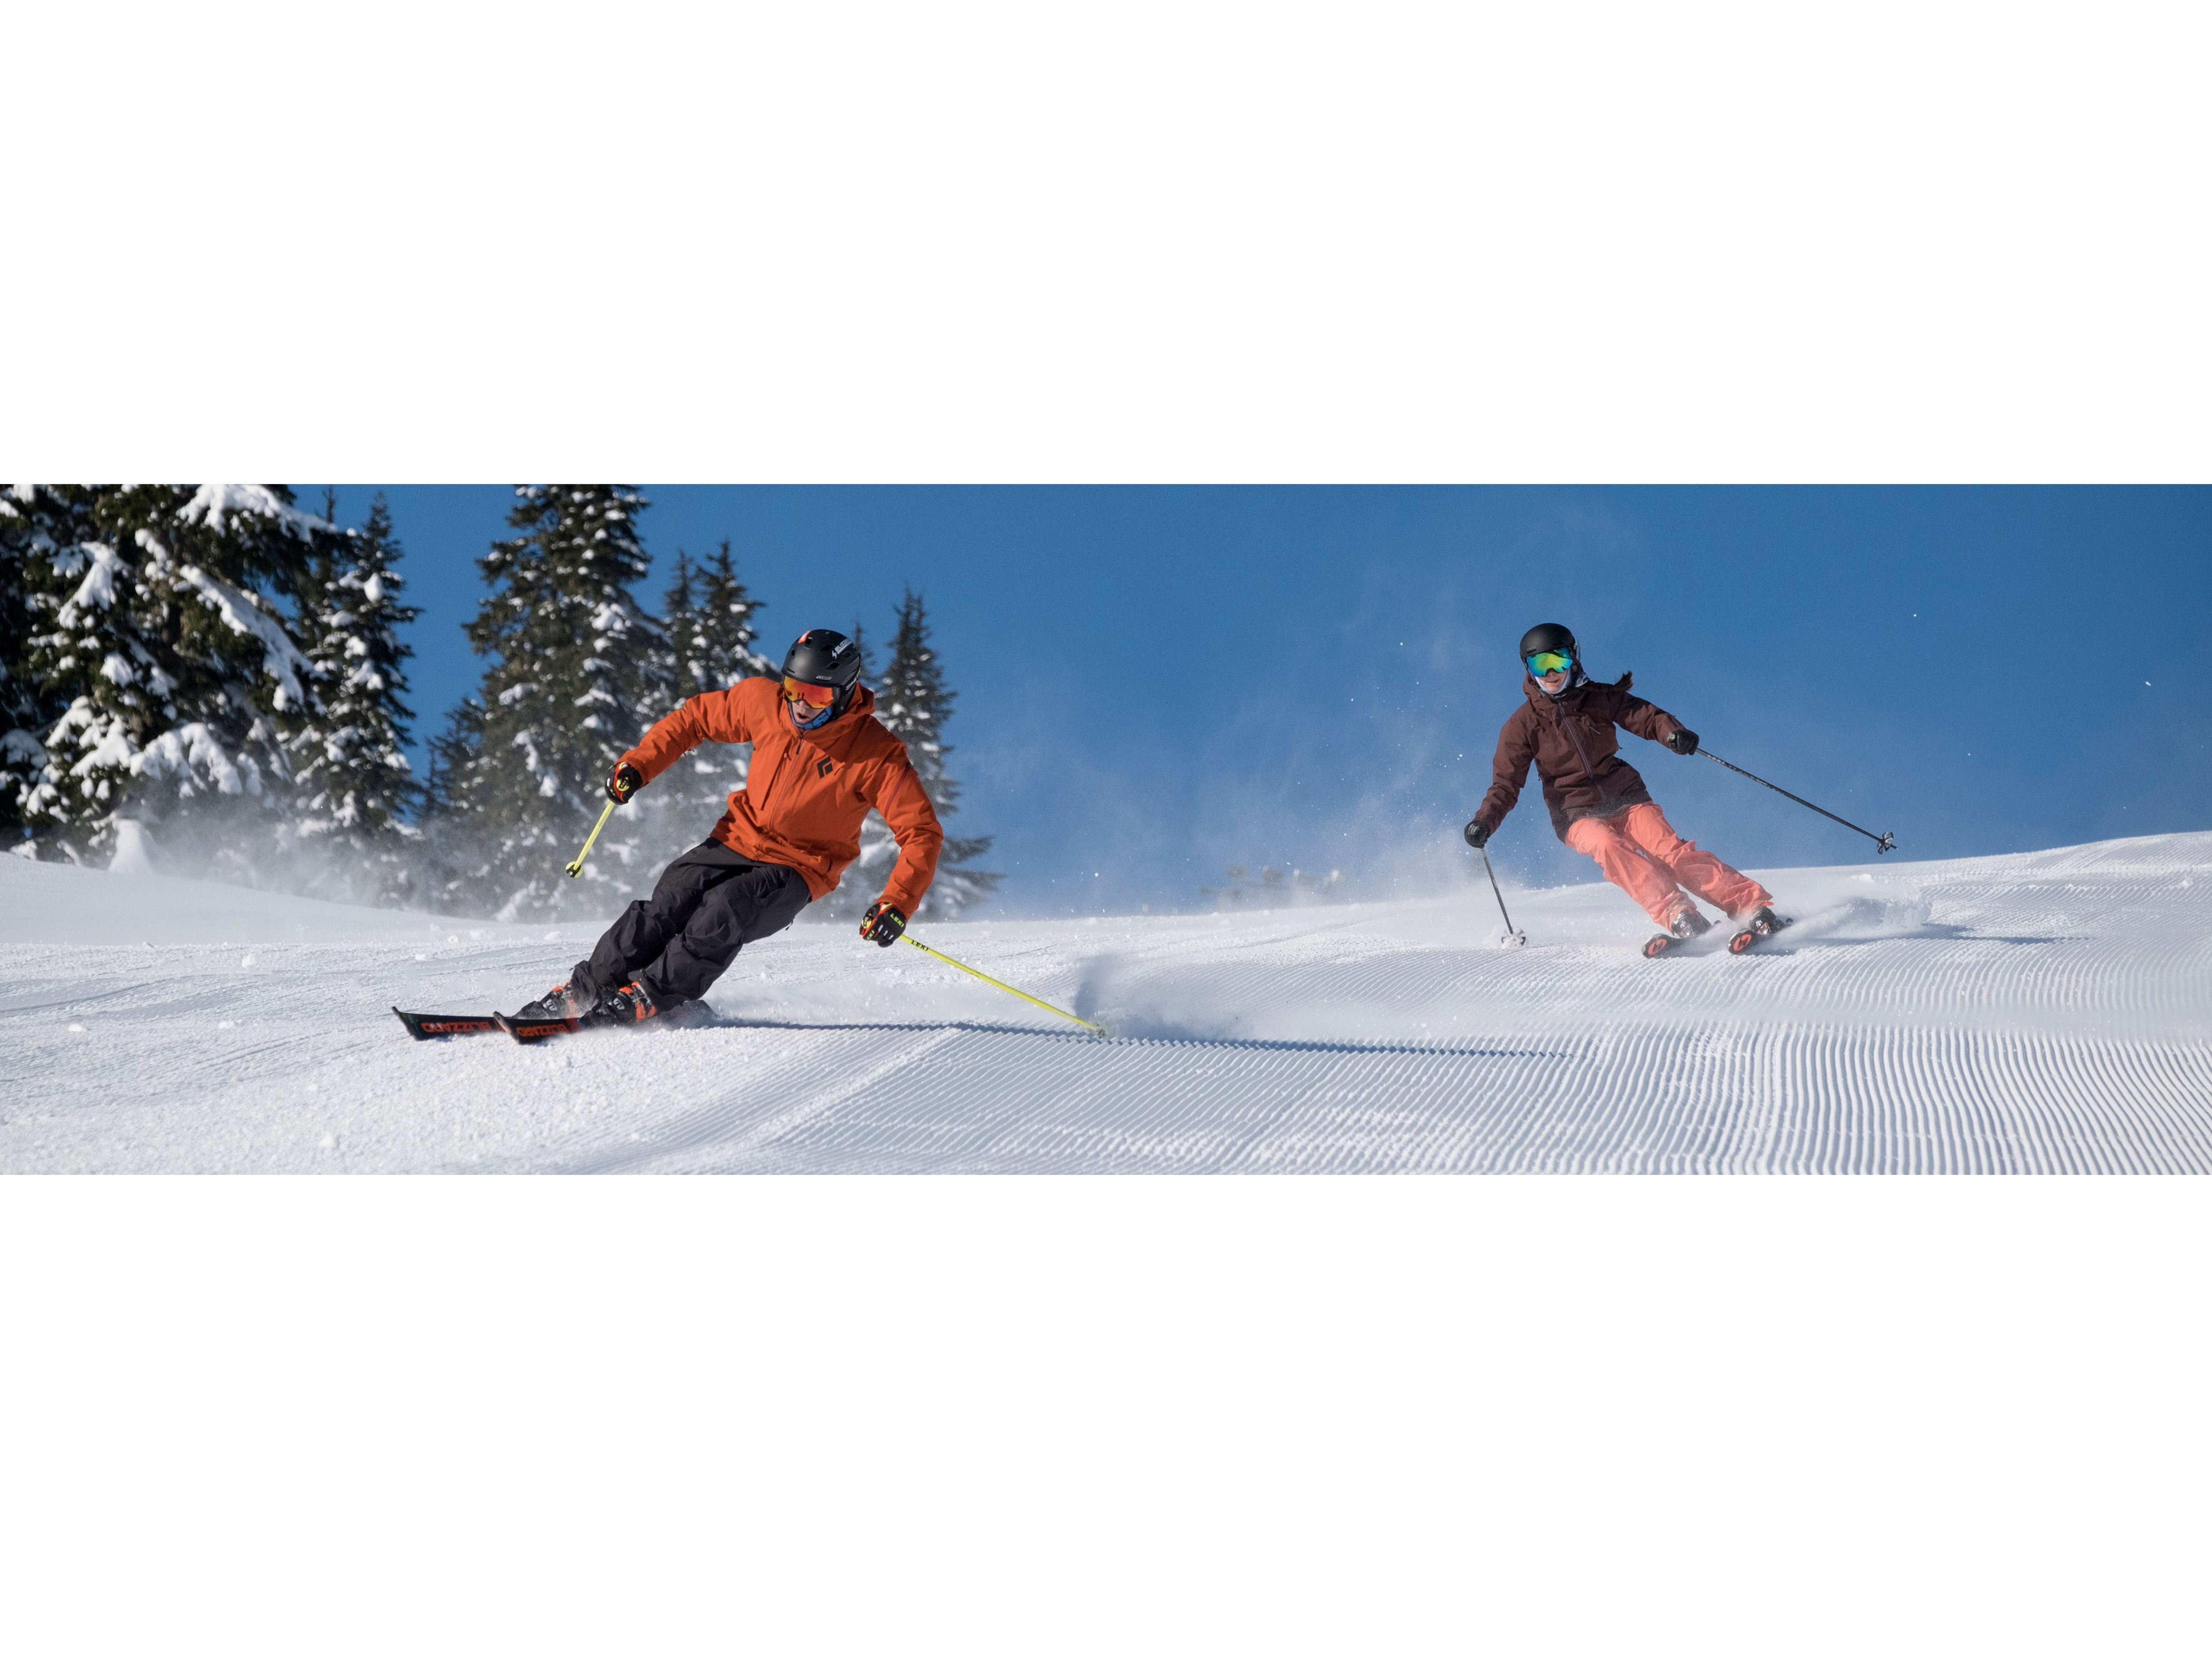 The Pro Ski and Ride Full-Service Ski and Snowboard Shop